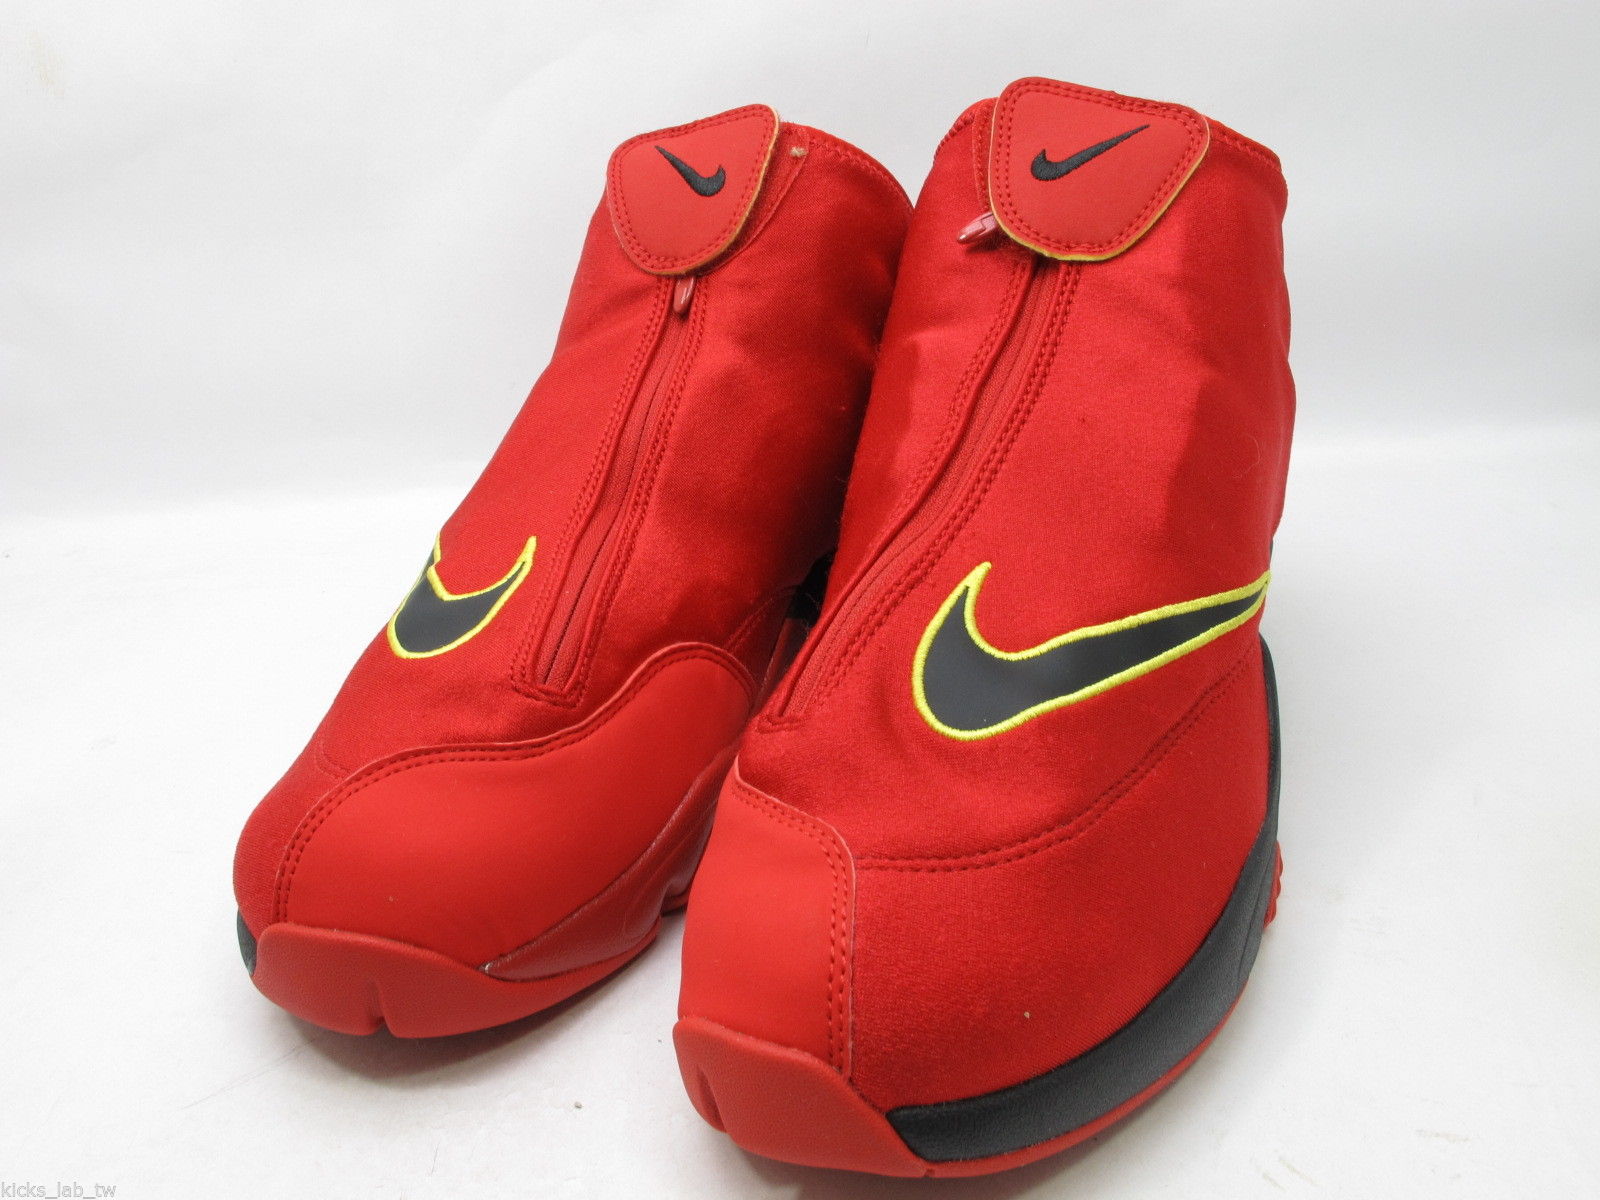 Nike Zoom Flight 98 The Glove "Heat"